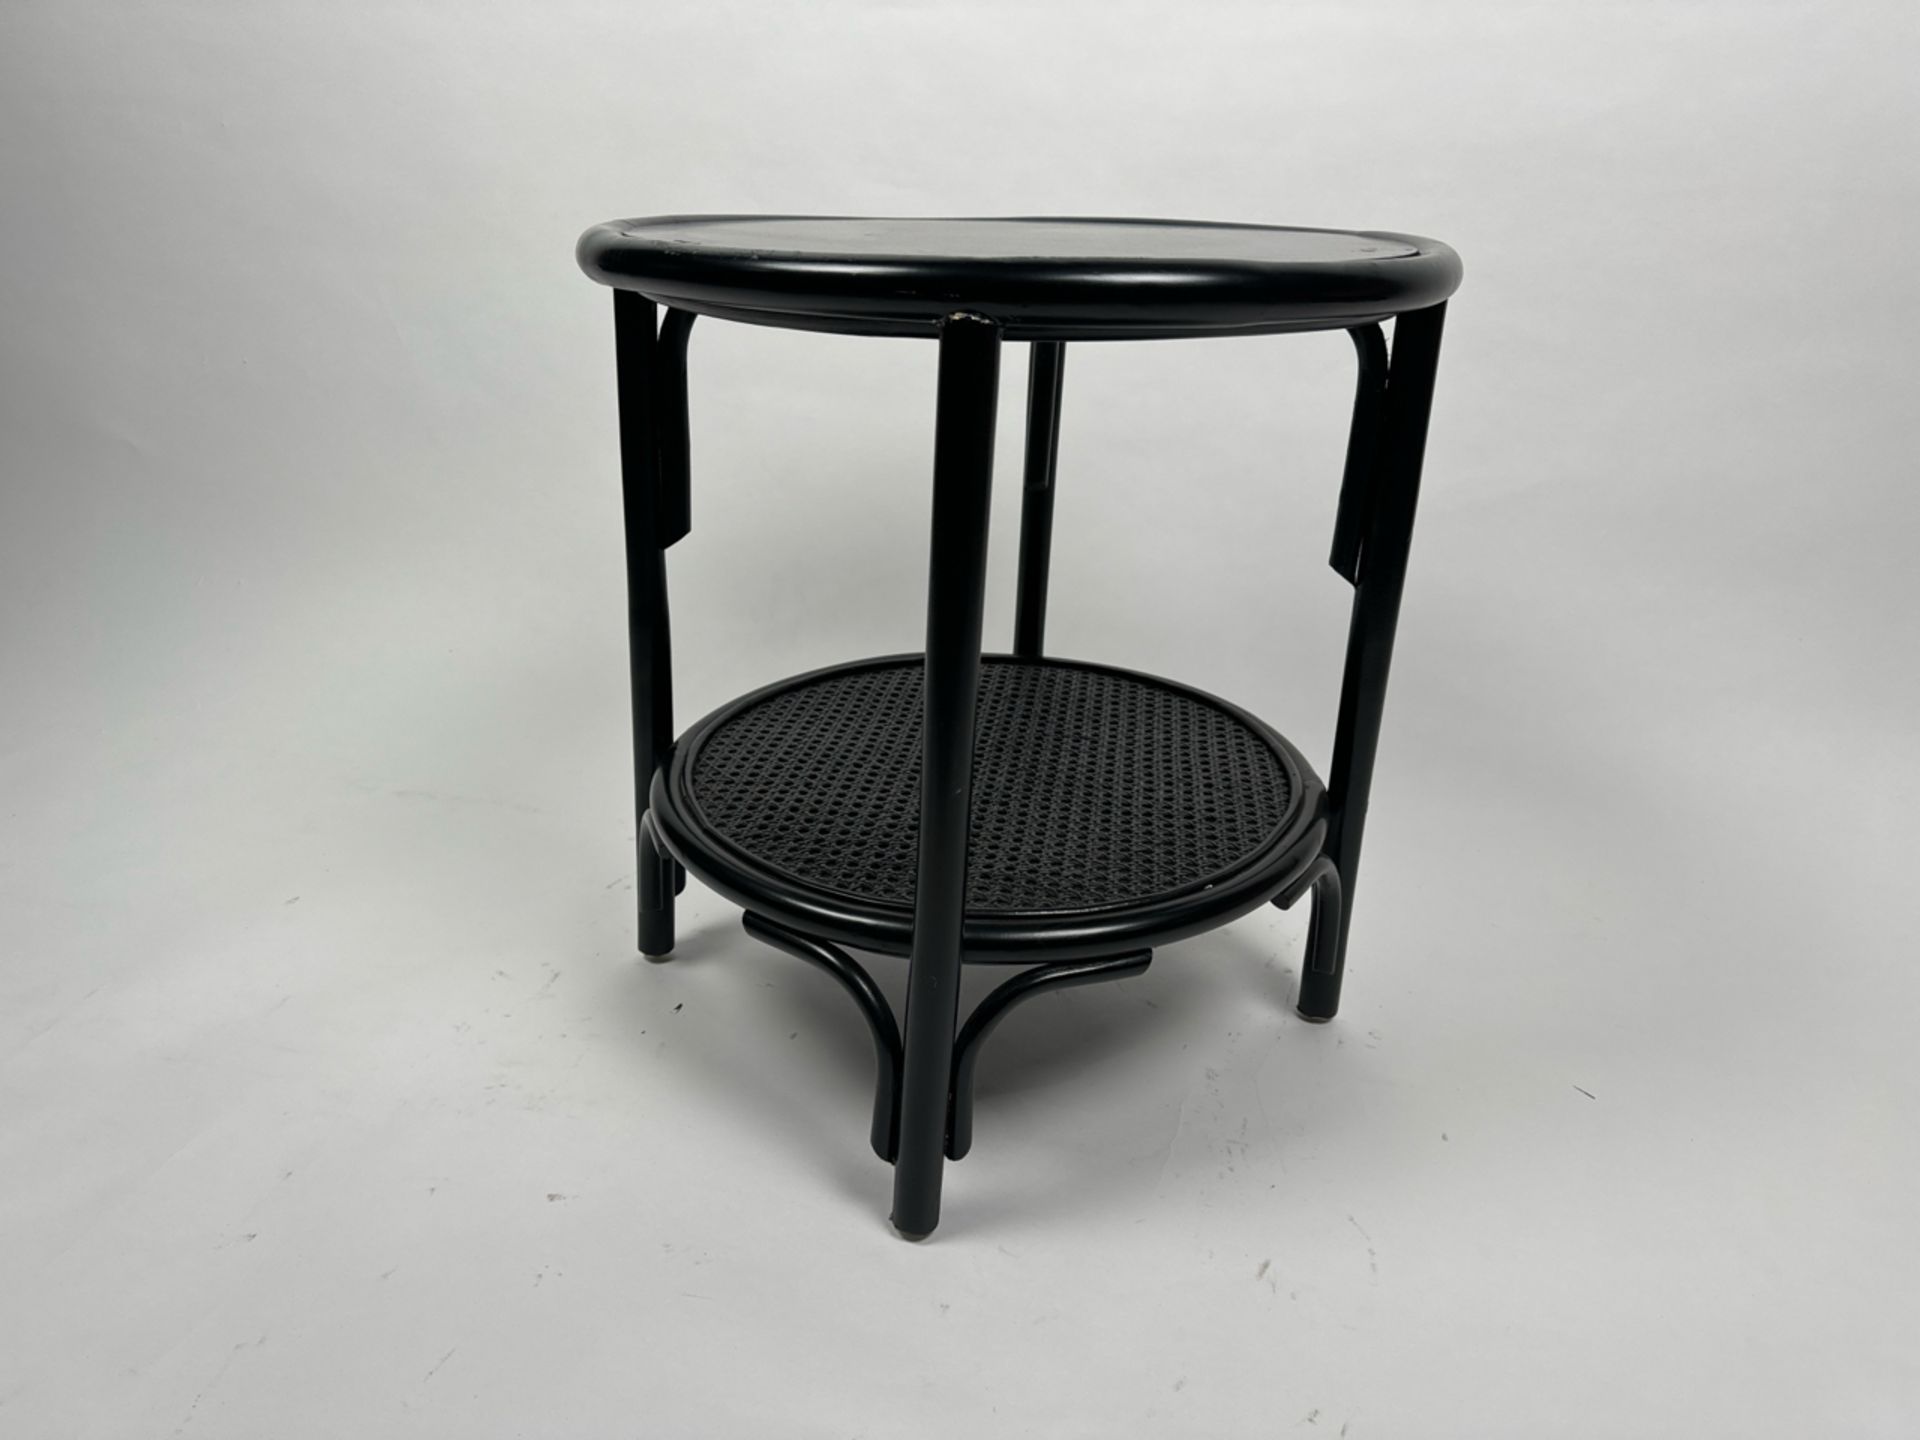 Nordal Kasai Coffee Table Black Wicker - Image 3 of 3